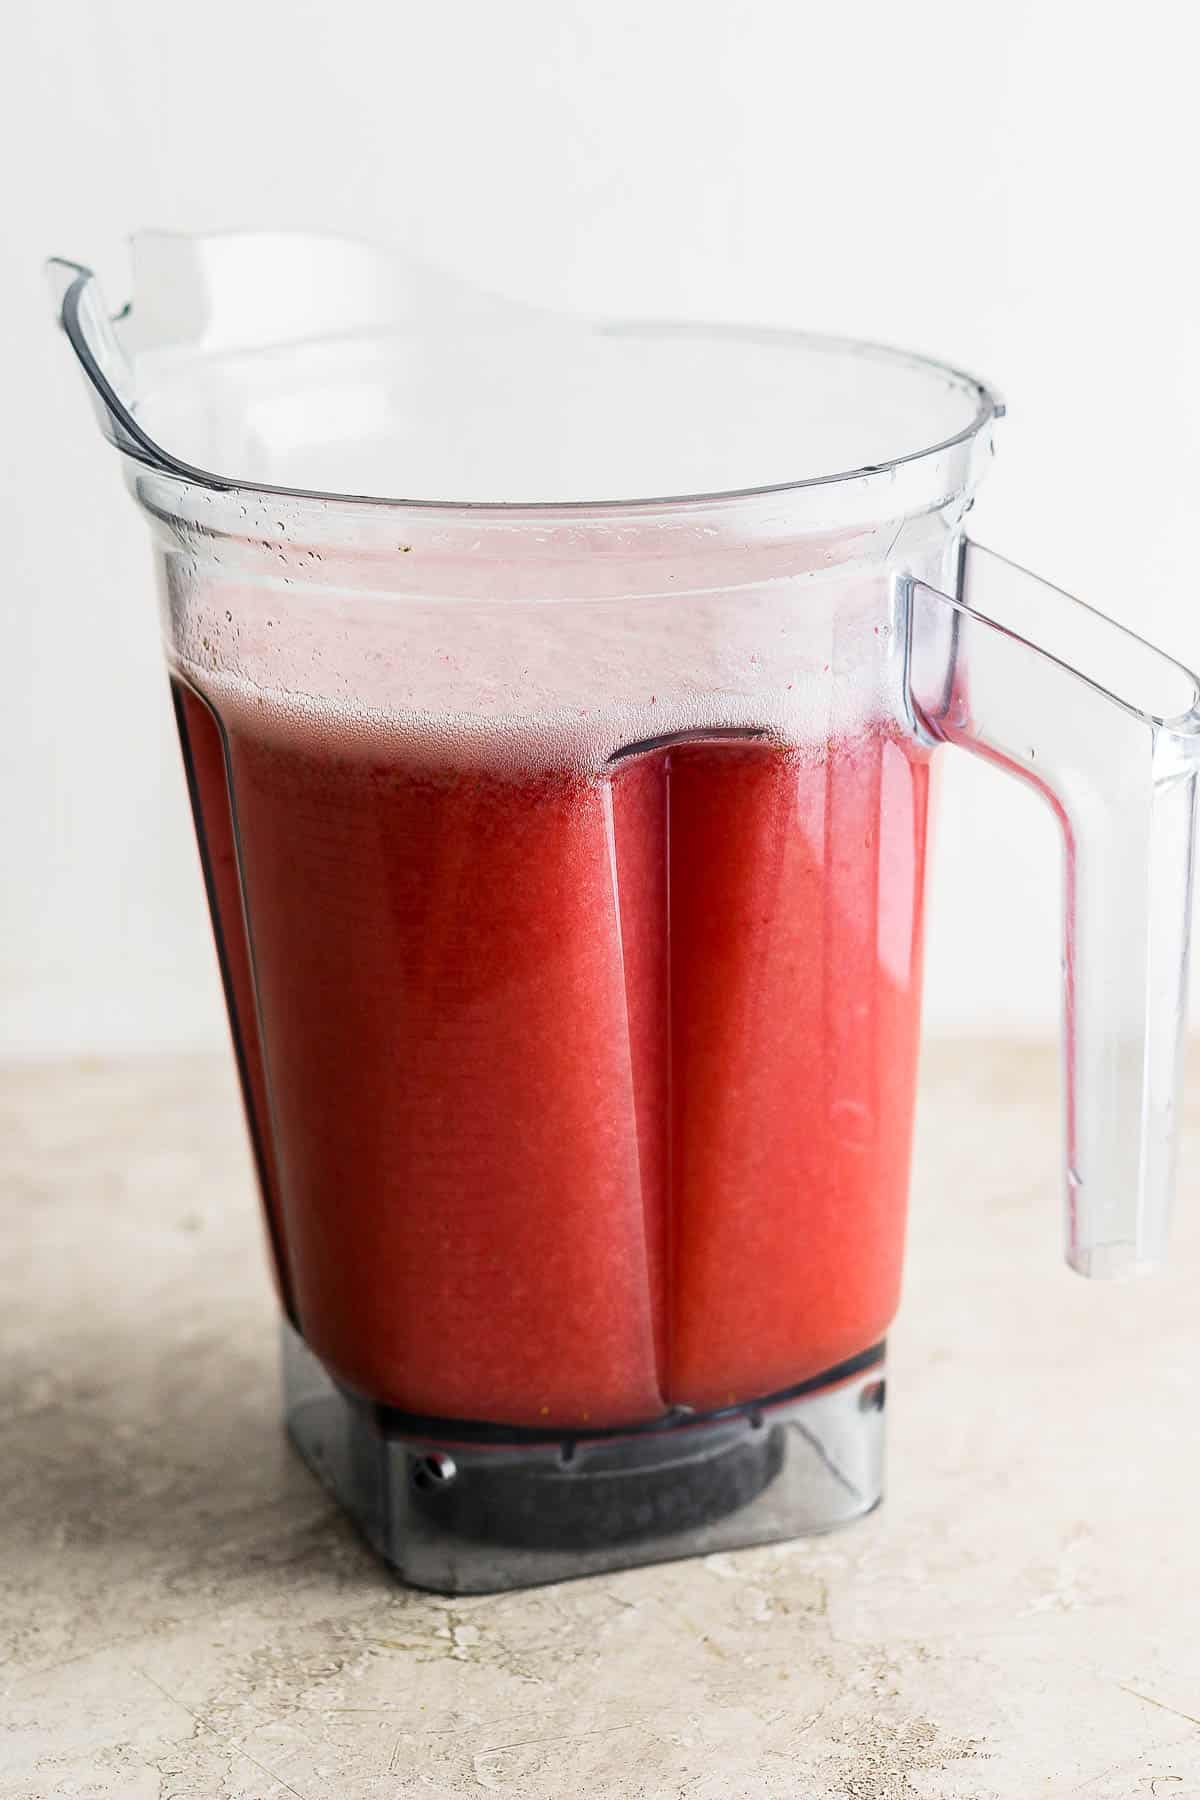 Blended agua de fresa (strawberry agua fresca) in a blender.